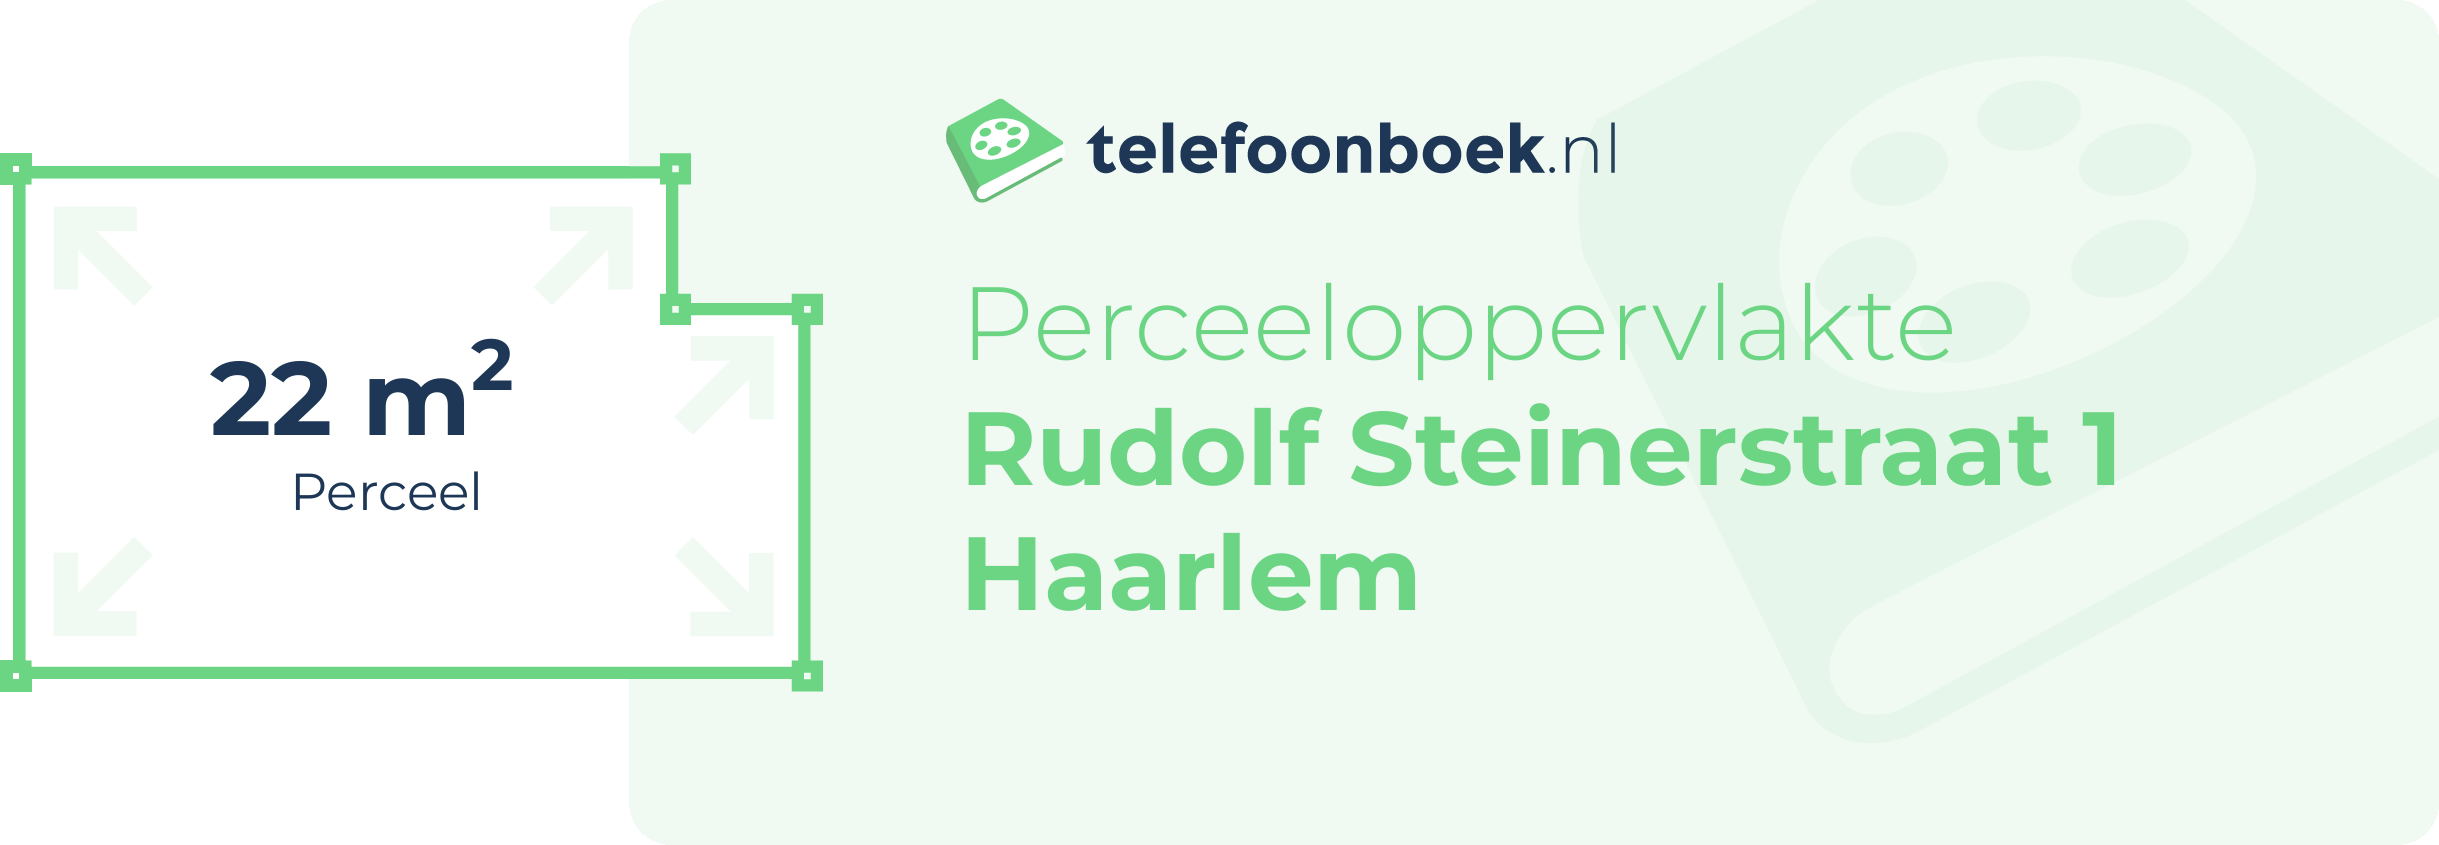 Perceeloppervlakte Rudolf Steinerstraat 1 Haarlem